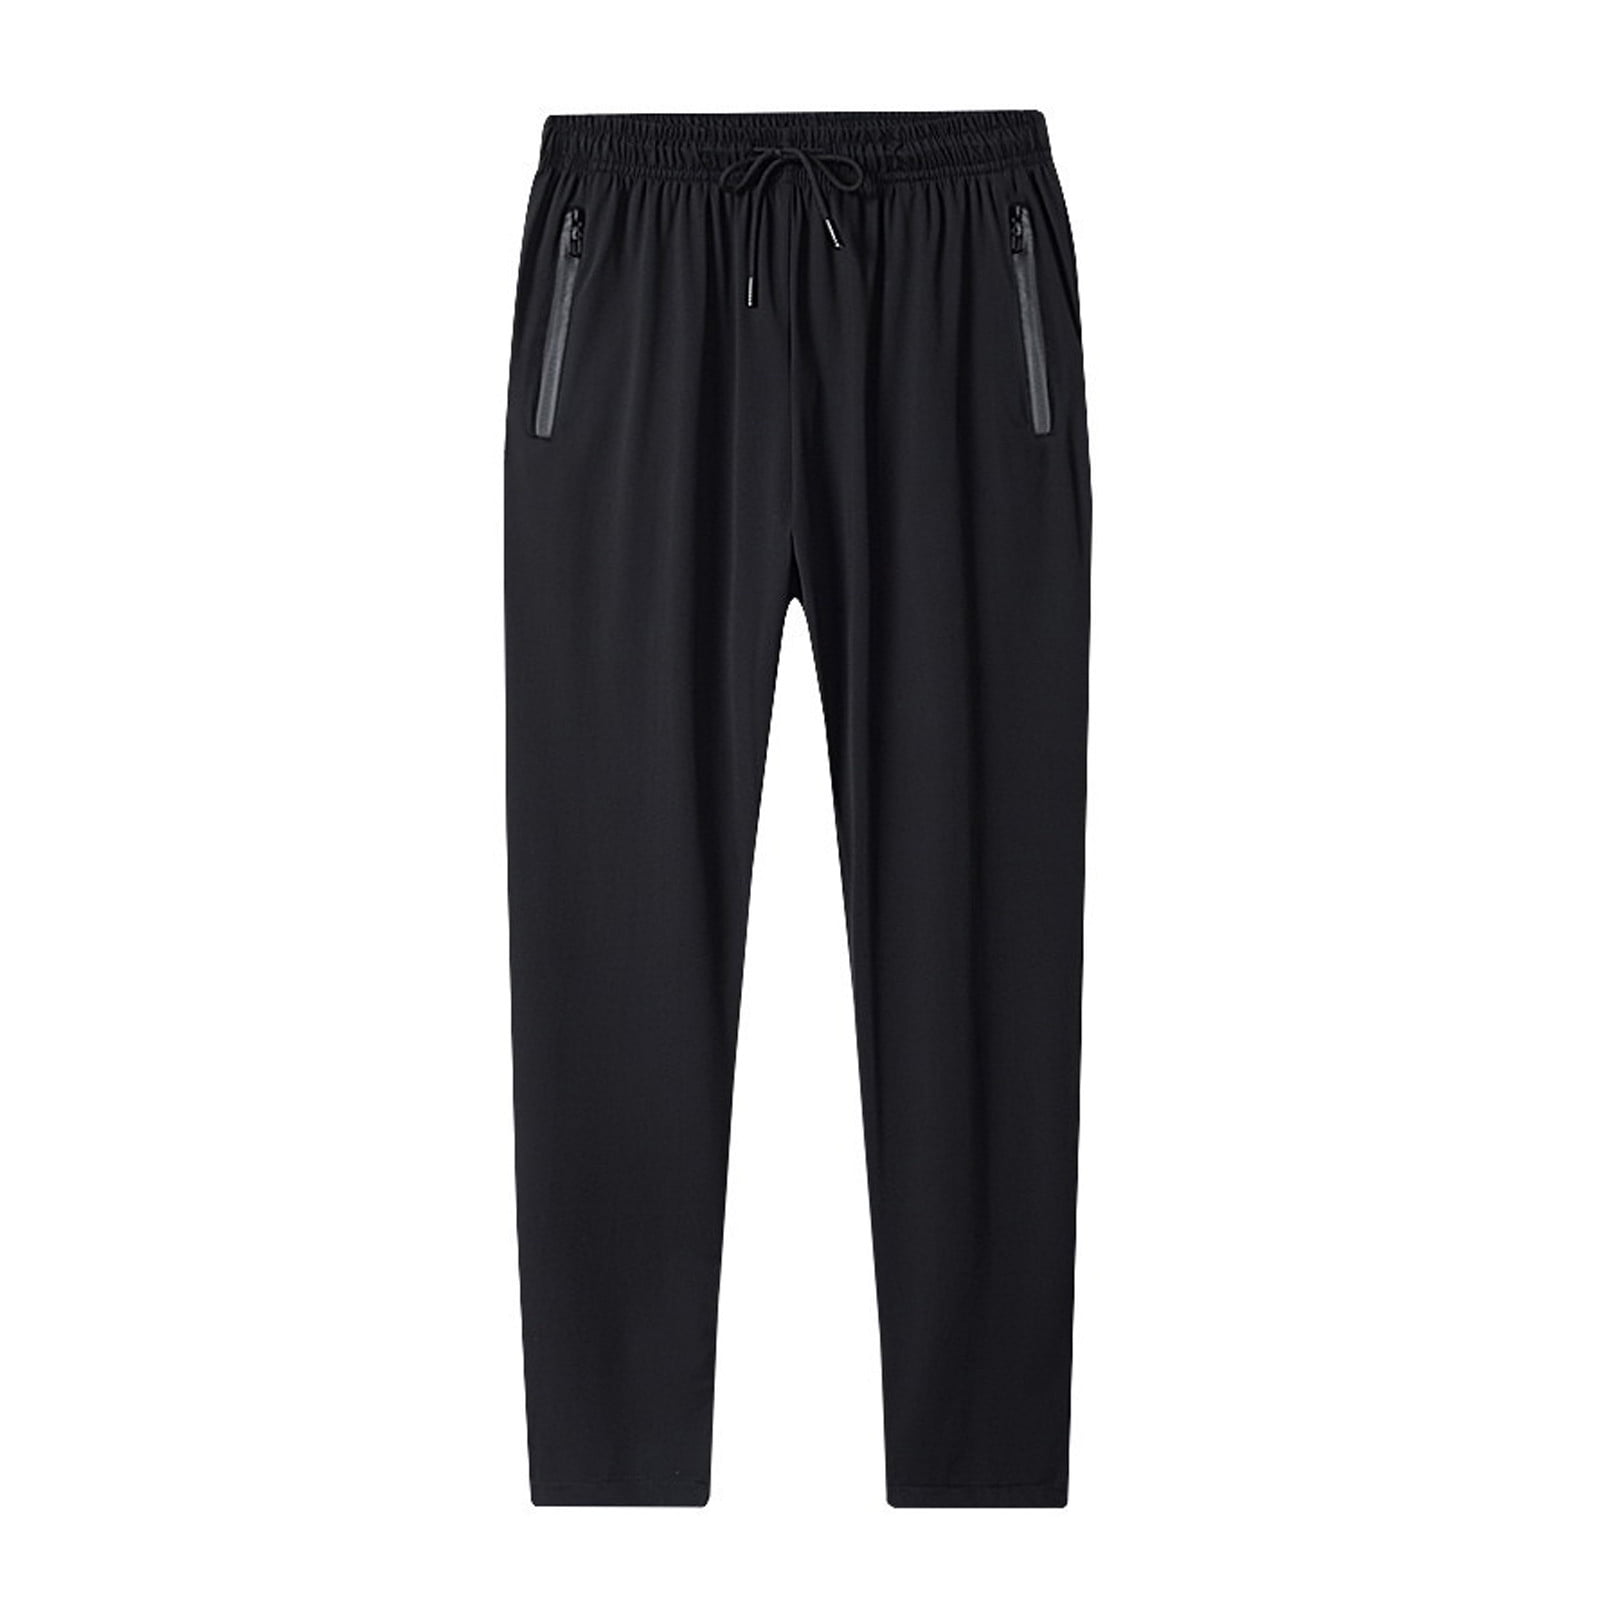 BJUTIR Sweatpants For Men Solid Sports Leisure Trousers Fitness Loose ...